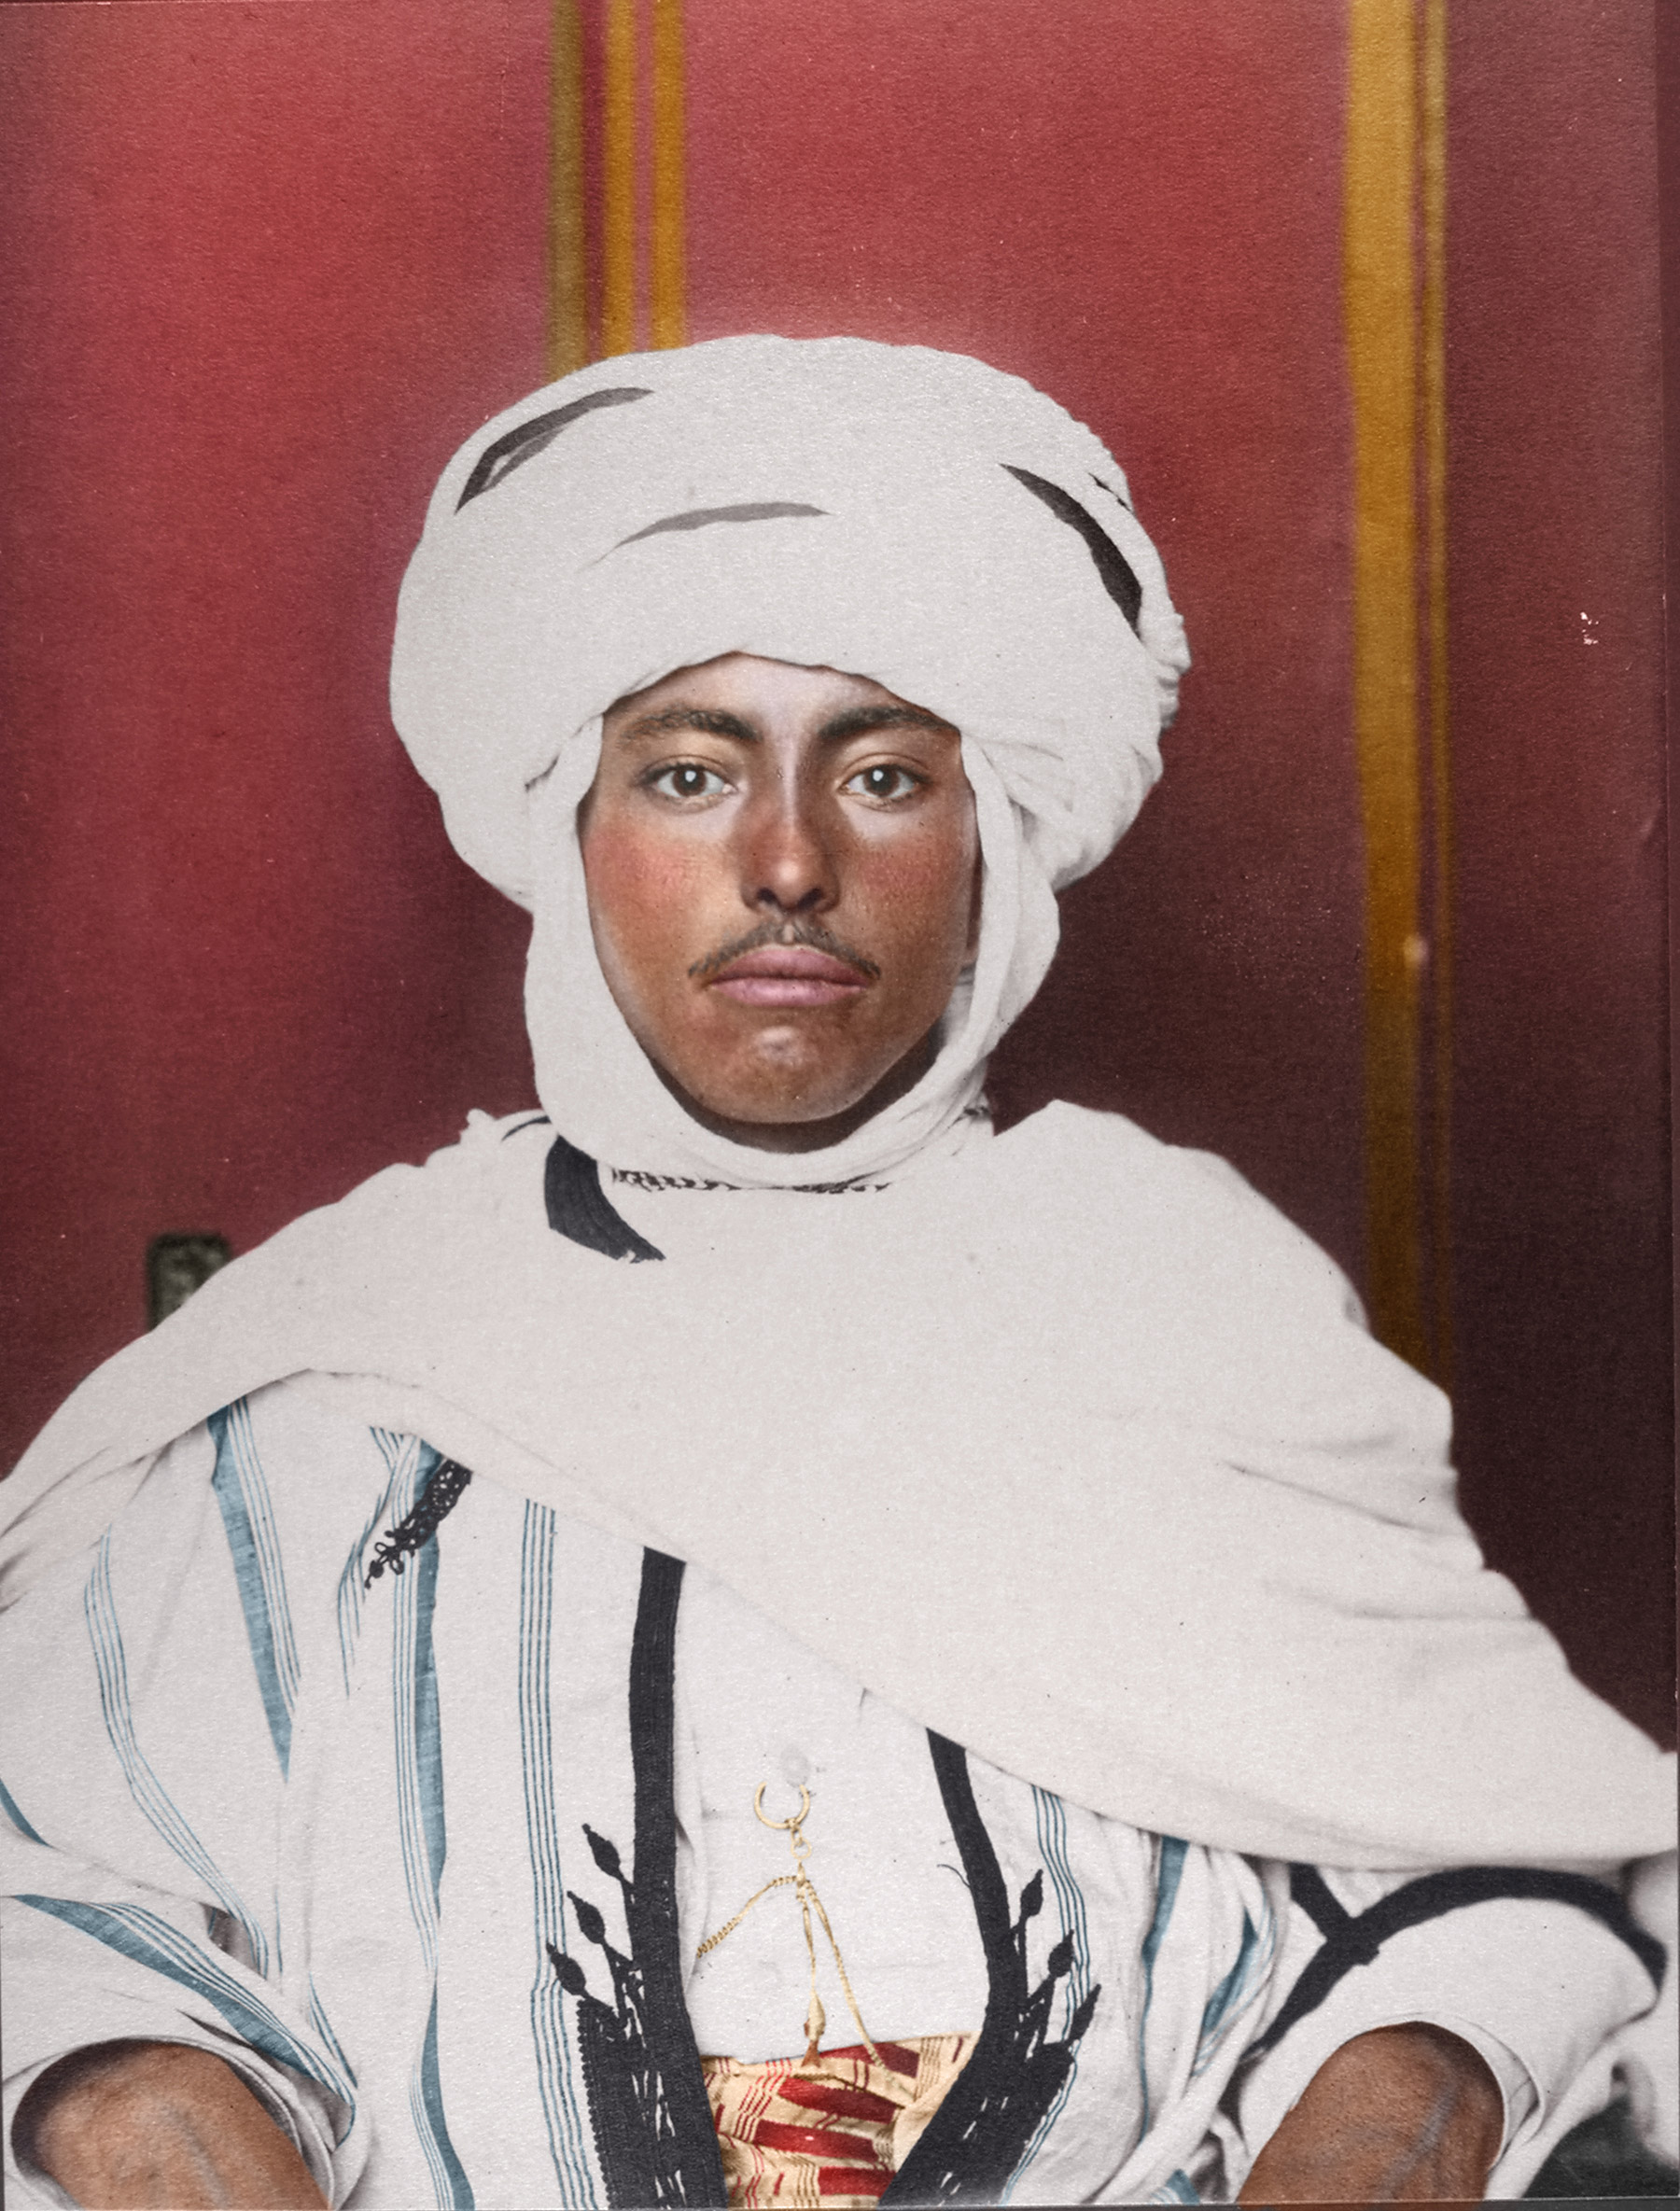 Portrait of an Algerian man at the Ellis Island Immigration Station, circa 1905-1914.